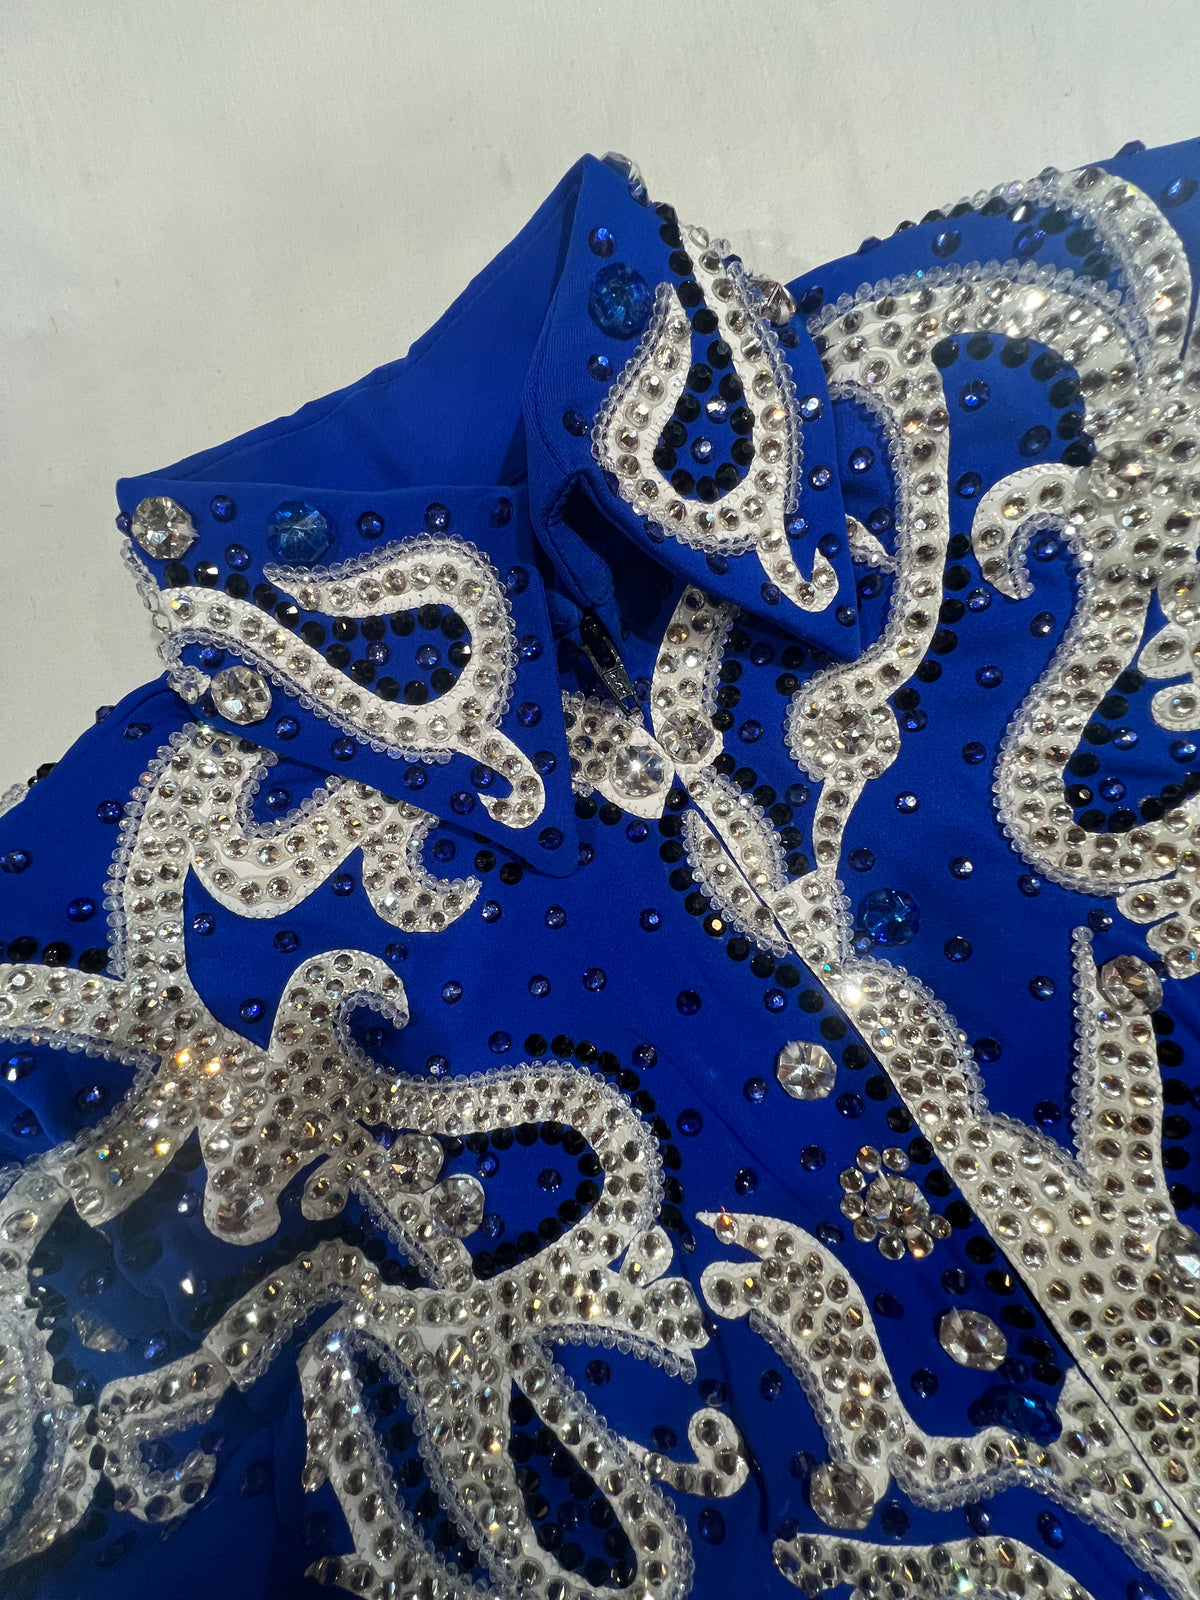 Kashani Ladies Royal Blue Hyper Crystal Jacket - Dudes Boutique